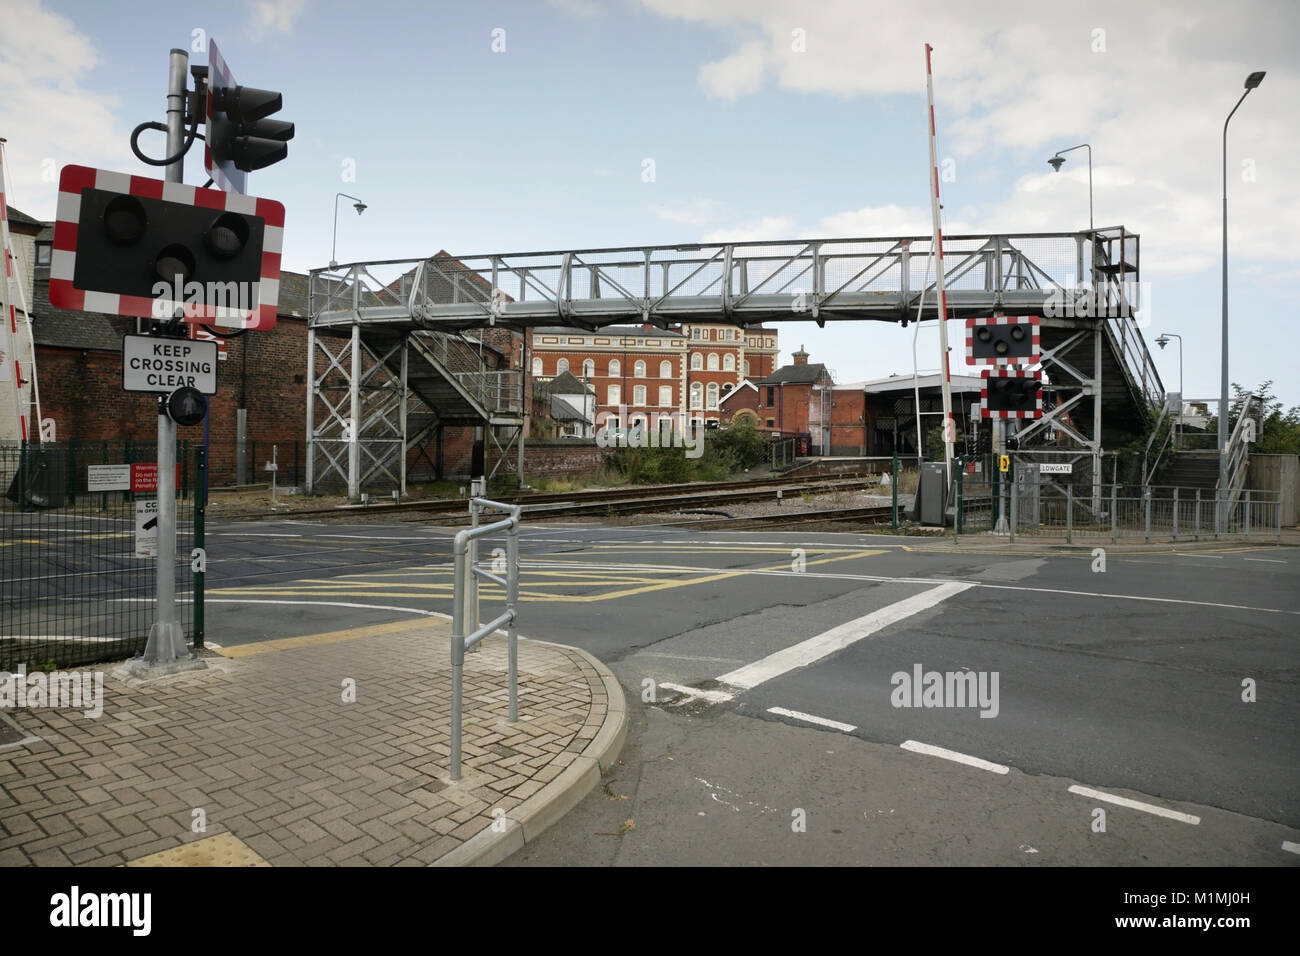 Wellowgate railway footbridge and level crossing, Grimsby, UK. Stock Photo